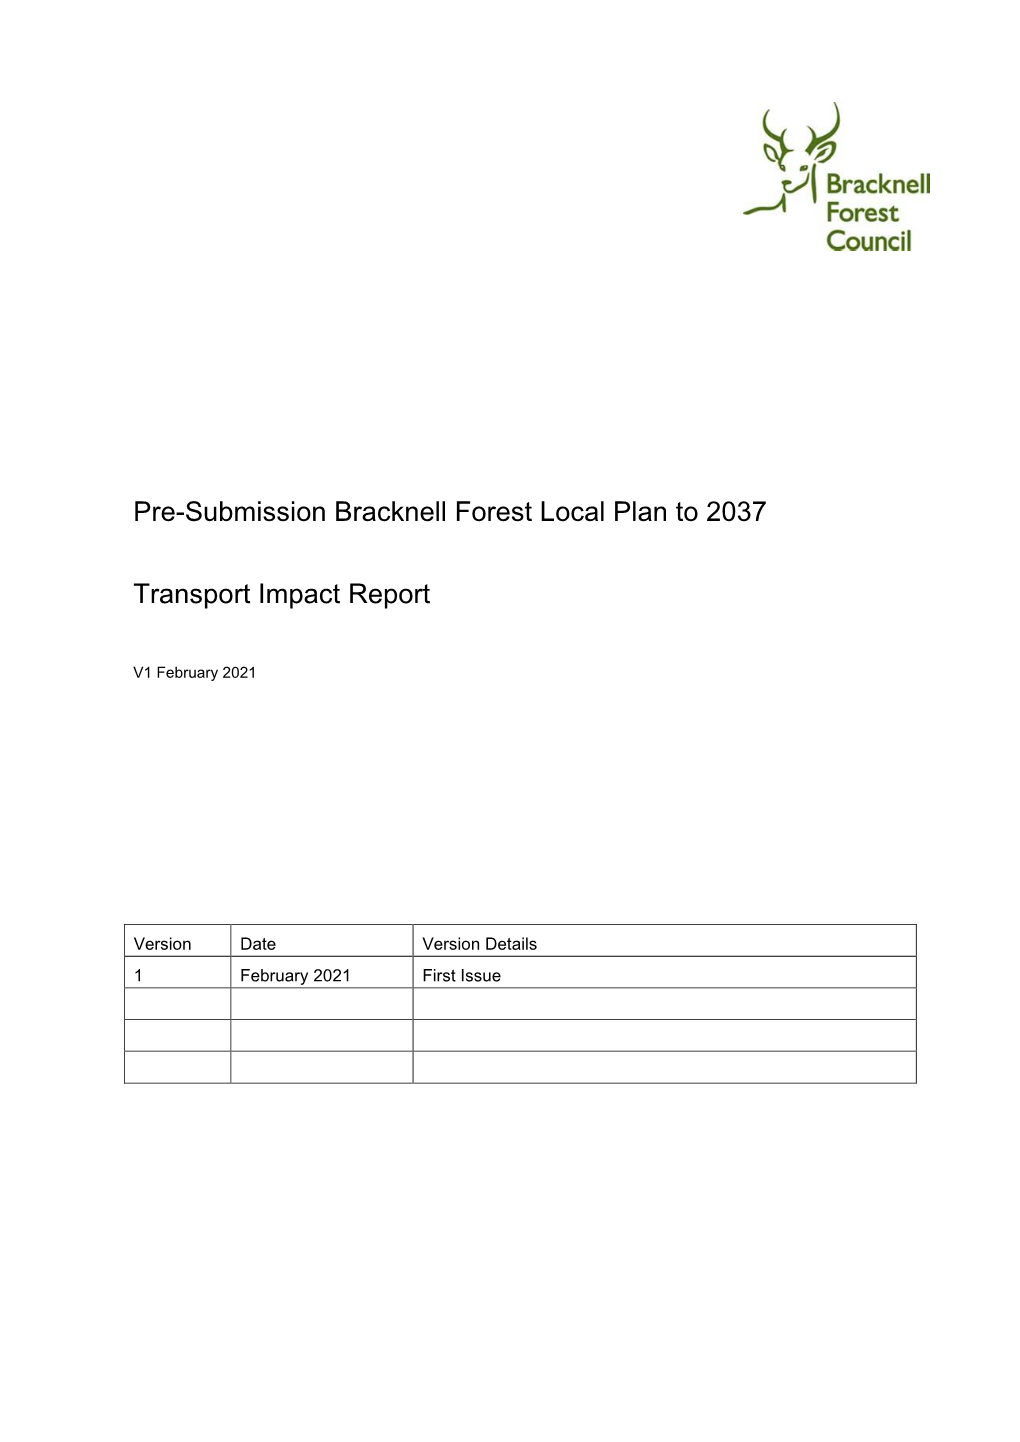 Transport Impact Report